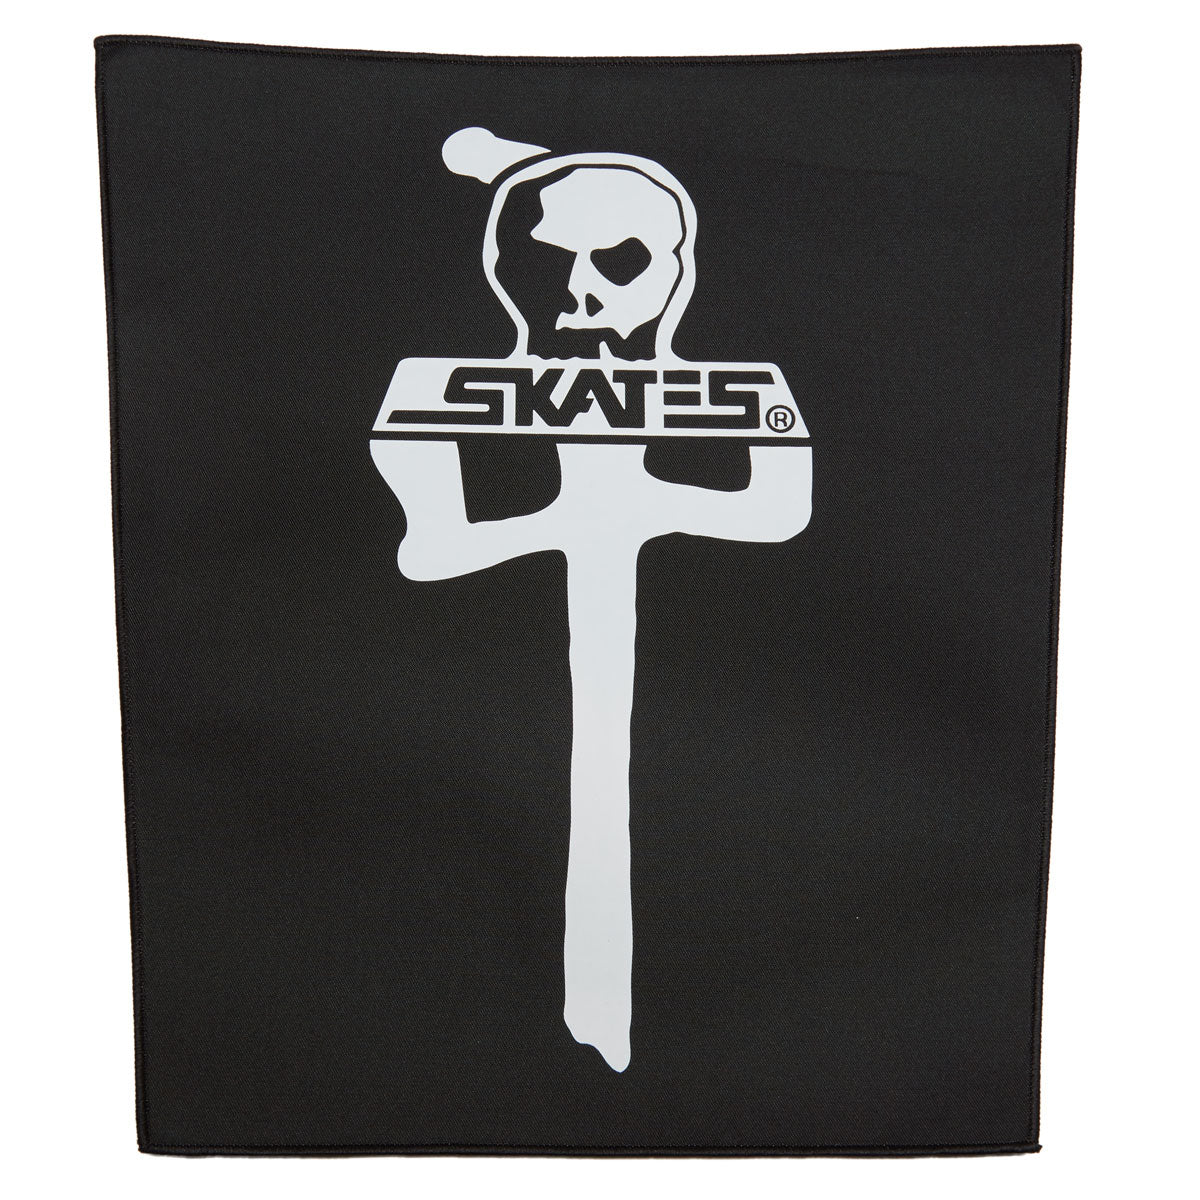 RDS x Skull Skates Back Patch - Black image 1